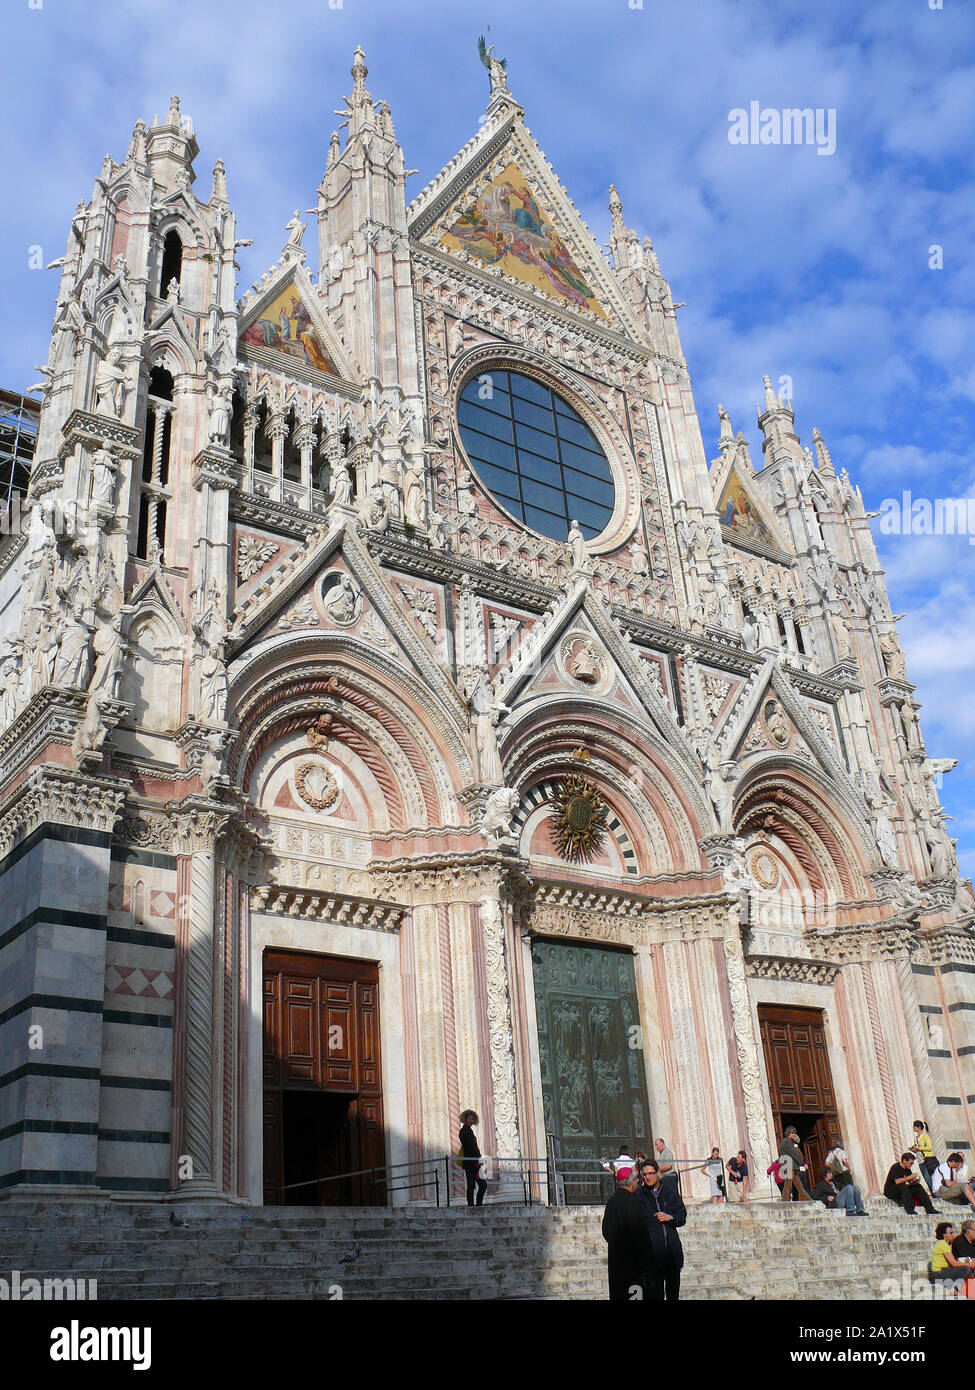 Metropolitan Cathedral of Saint Mary of the Assumption, Cattedrale Metropolitana di Santa Maria Assunta, Siena, Tuscany, Toscana, Italy, Europe Stock Photo